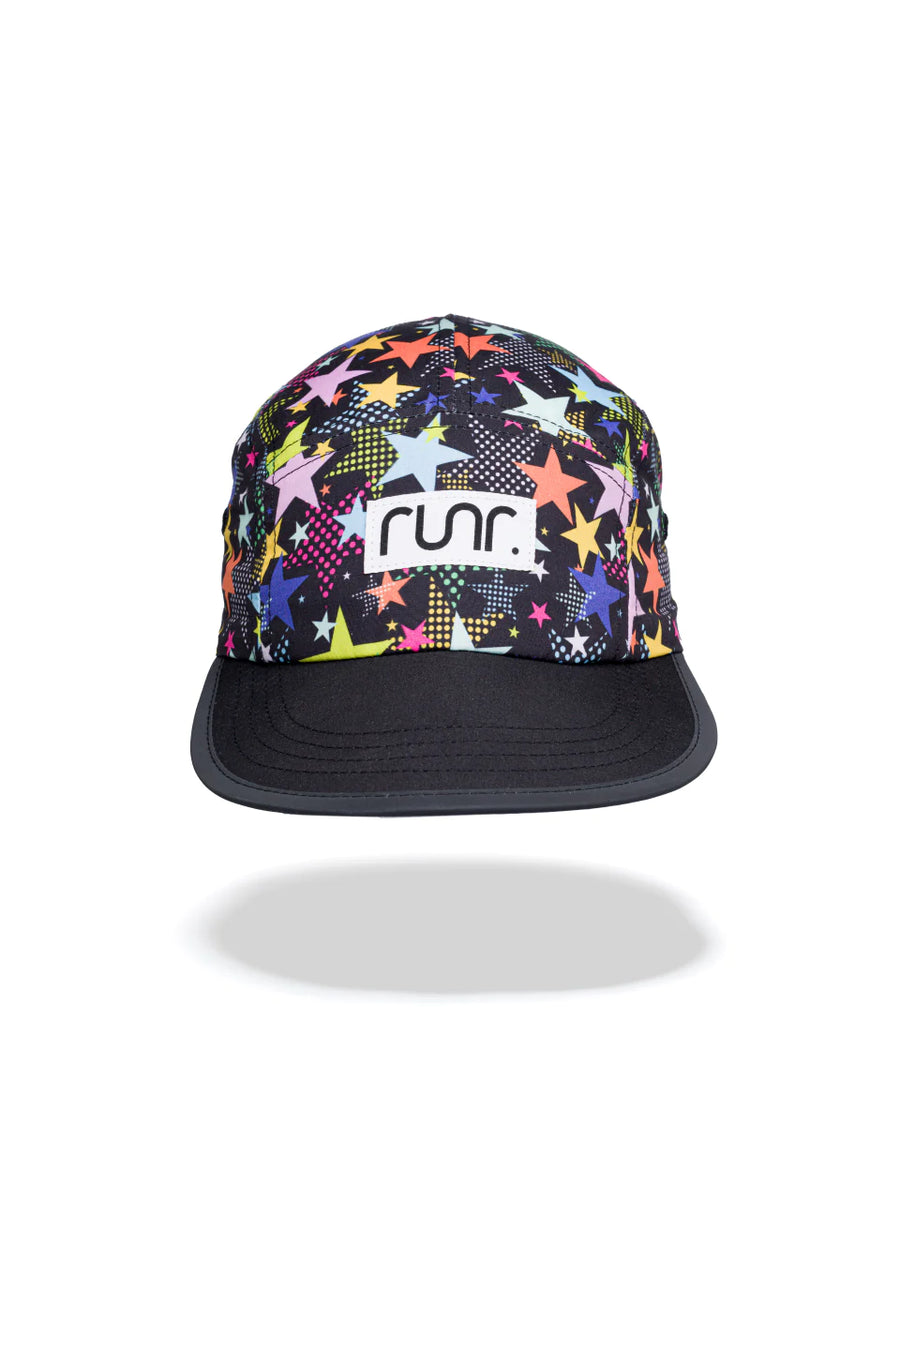 Runr Barcelona Technical Running Hat